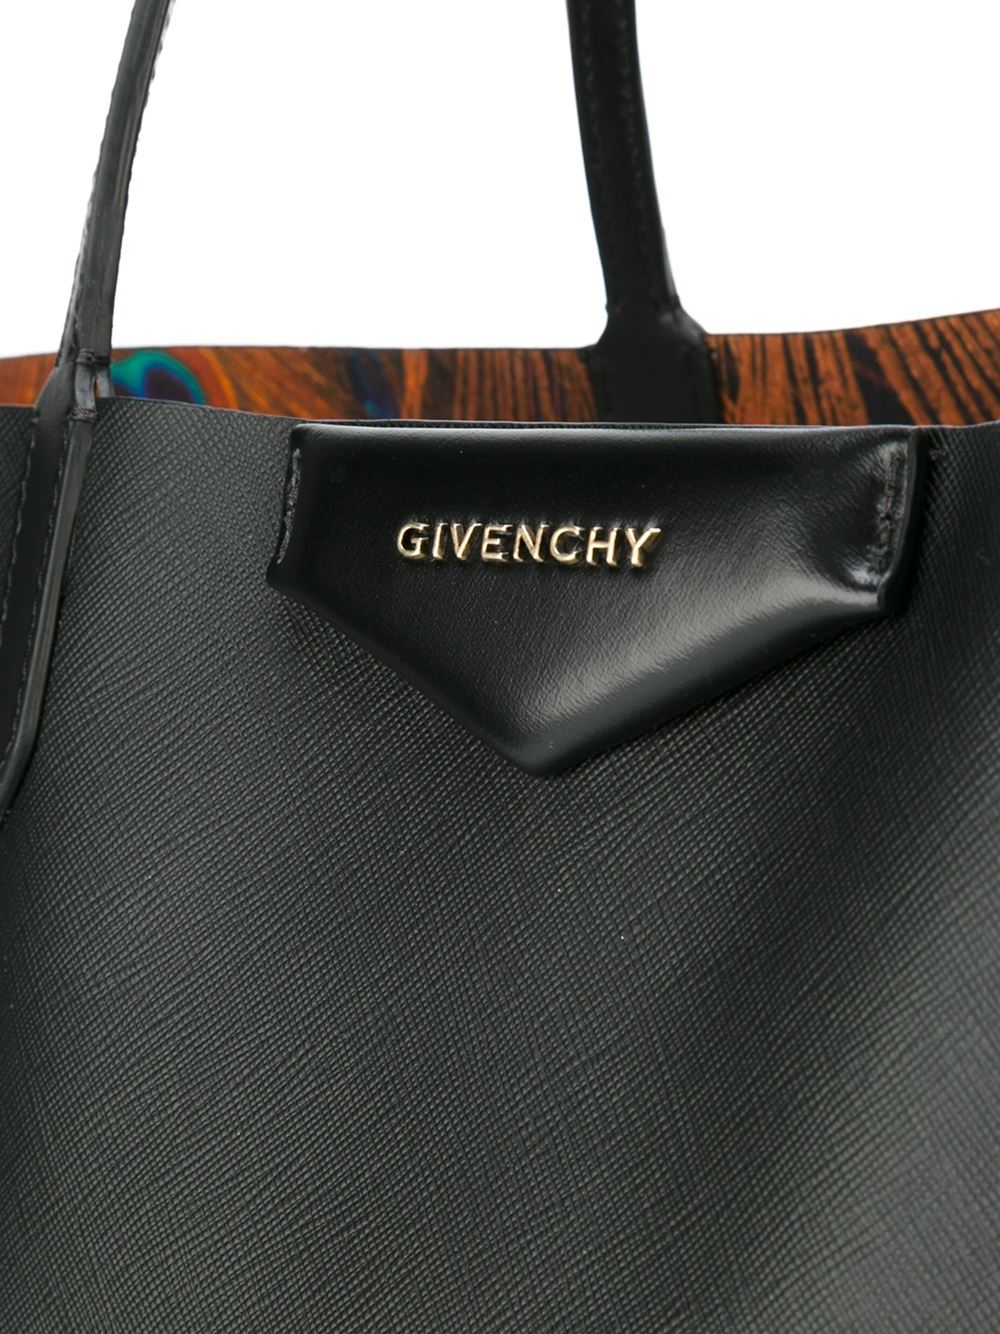 Givenchy Synthetic Peacock Print Antigona Shopping Bag in Black - Lyst